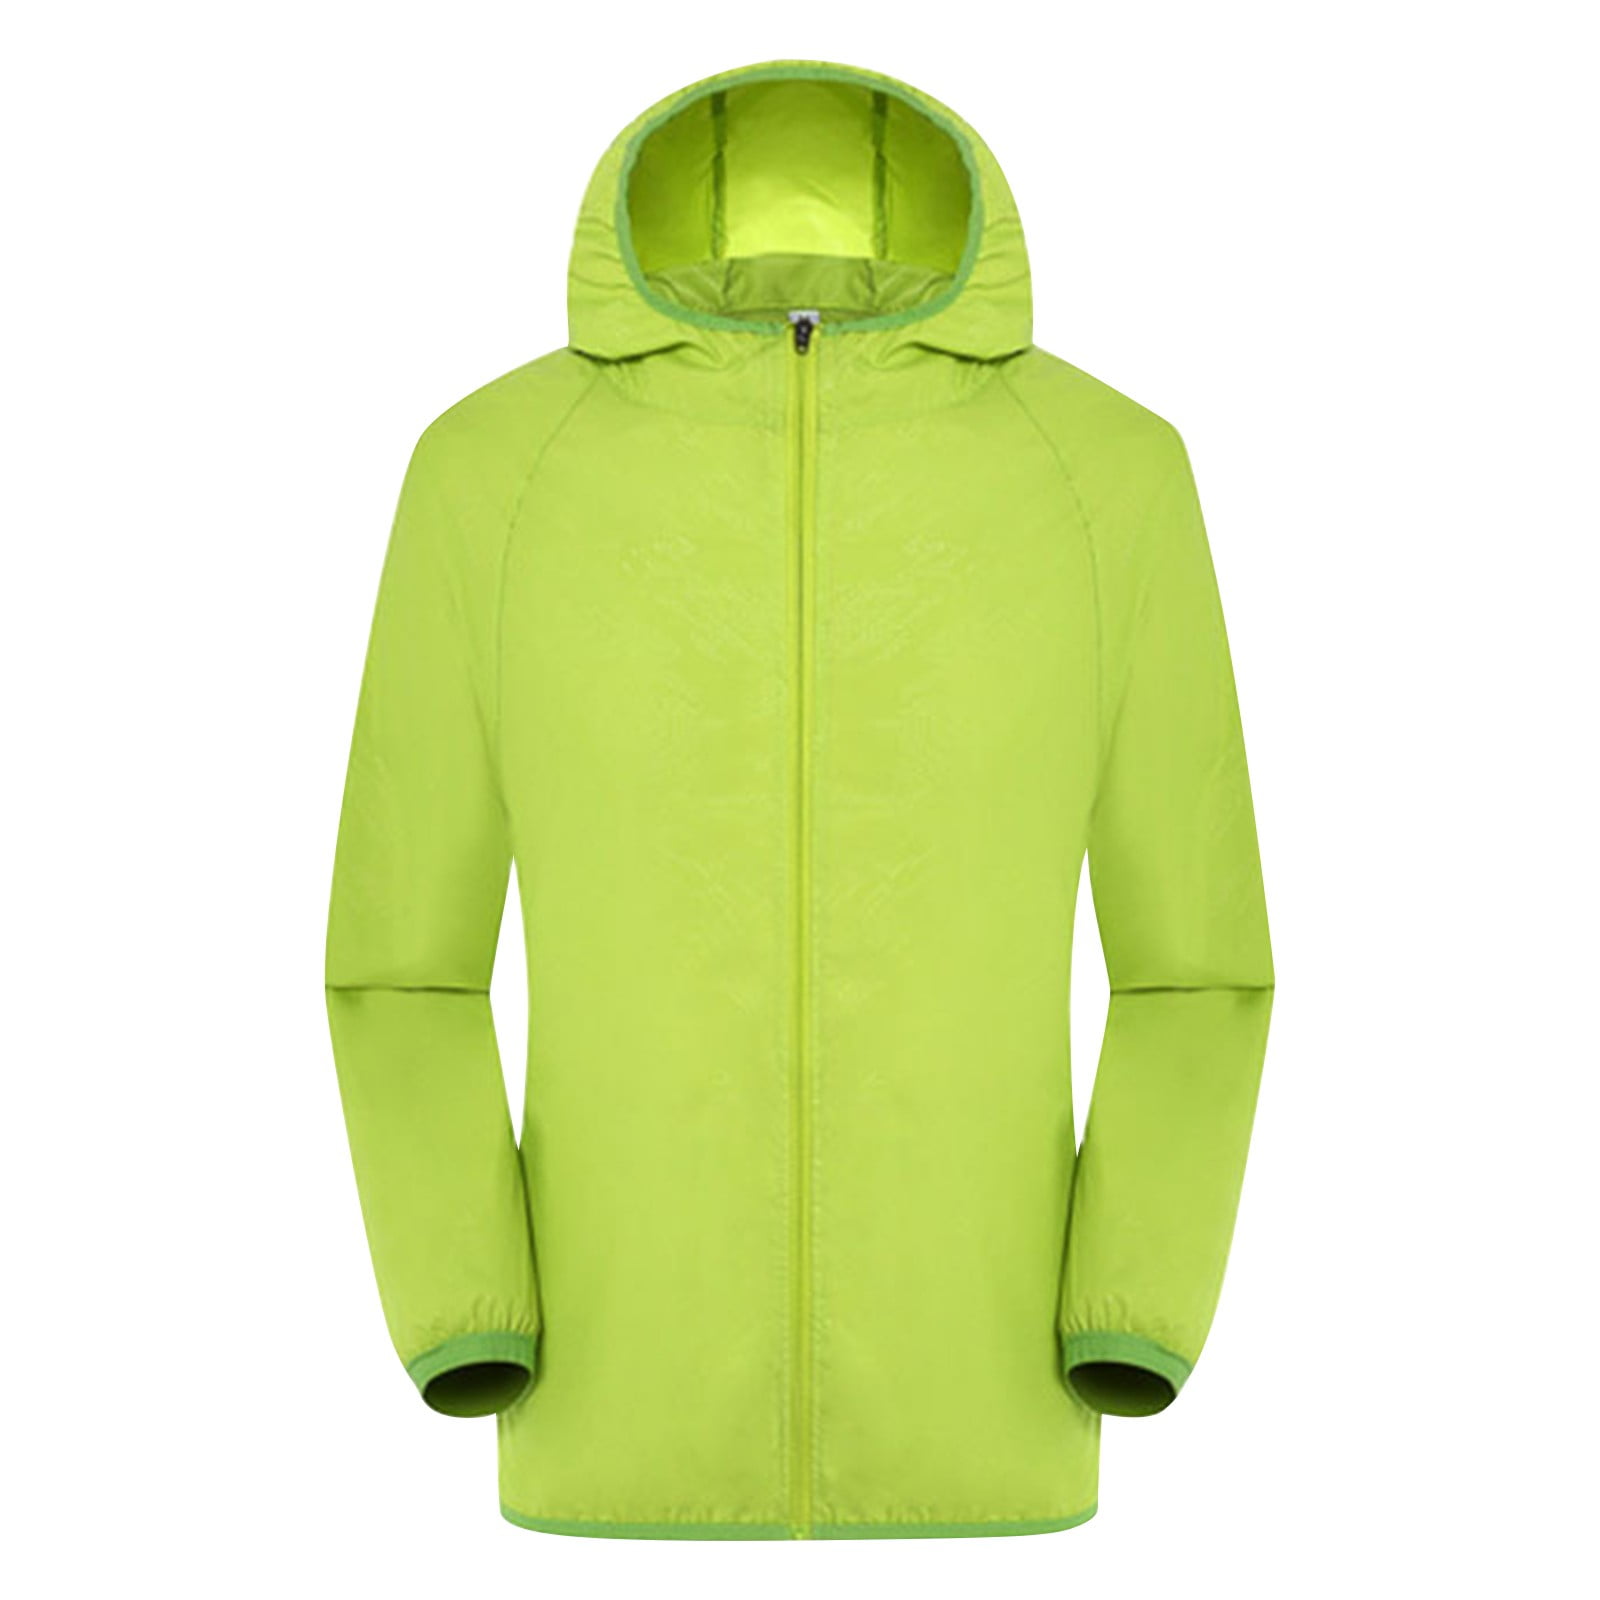 Noarlalf Womens Coats, Women Solid Rain Jacket Outdoor Plus Size Hooded ...